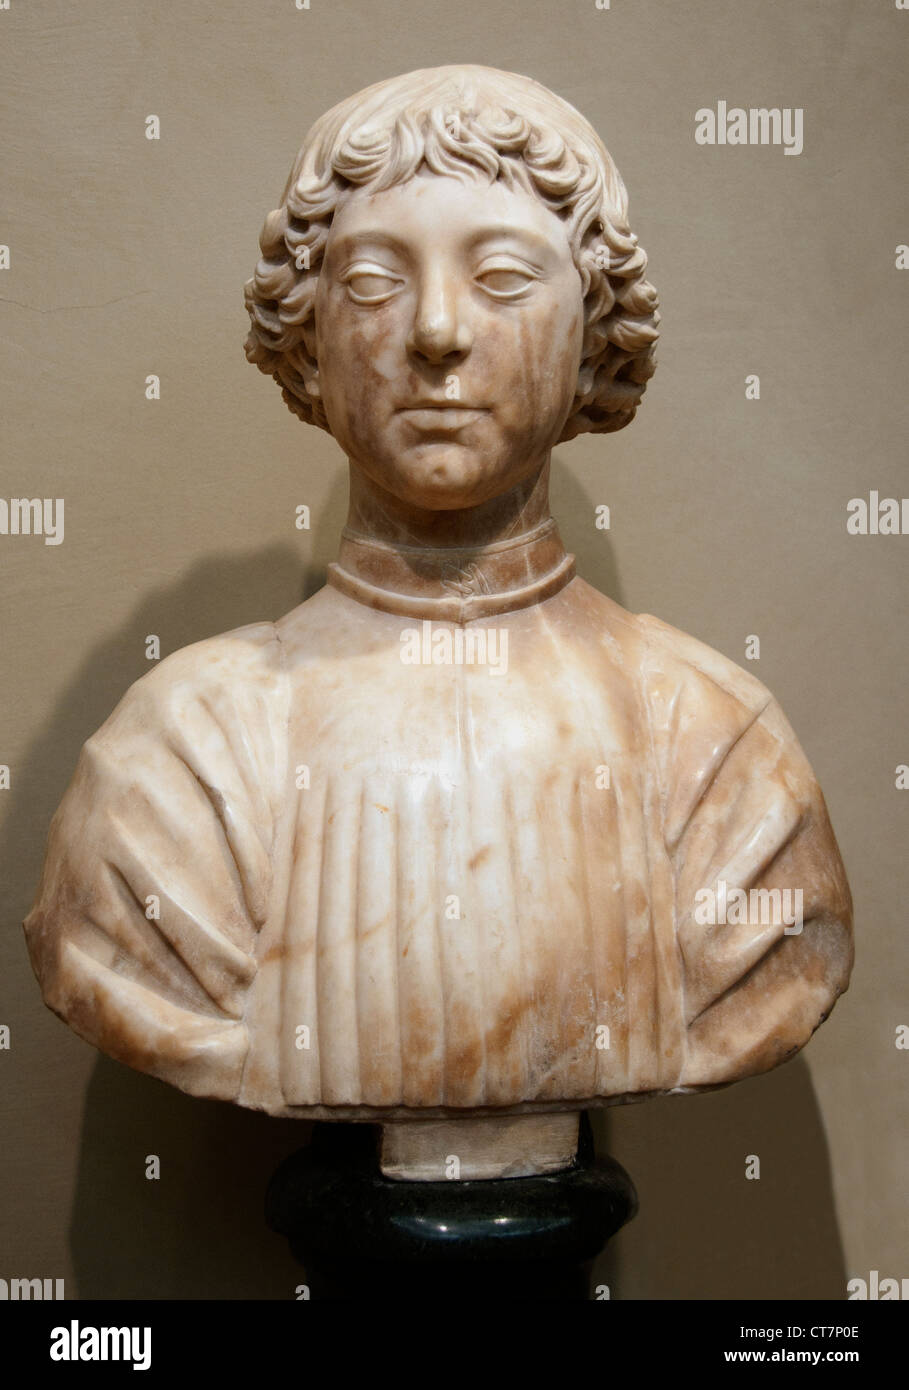 Busto de un joven italiano Italia Toscana del Siglo XV Foto de stock